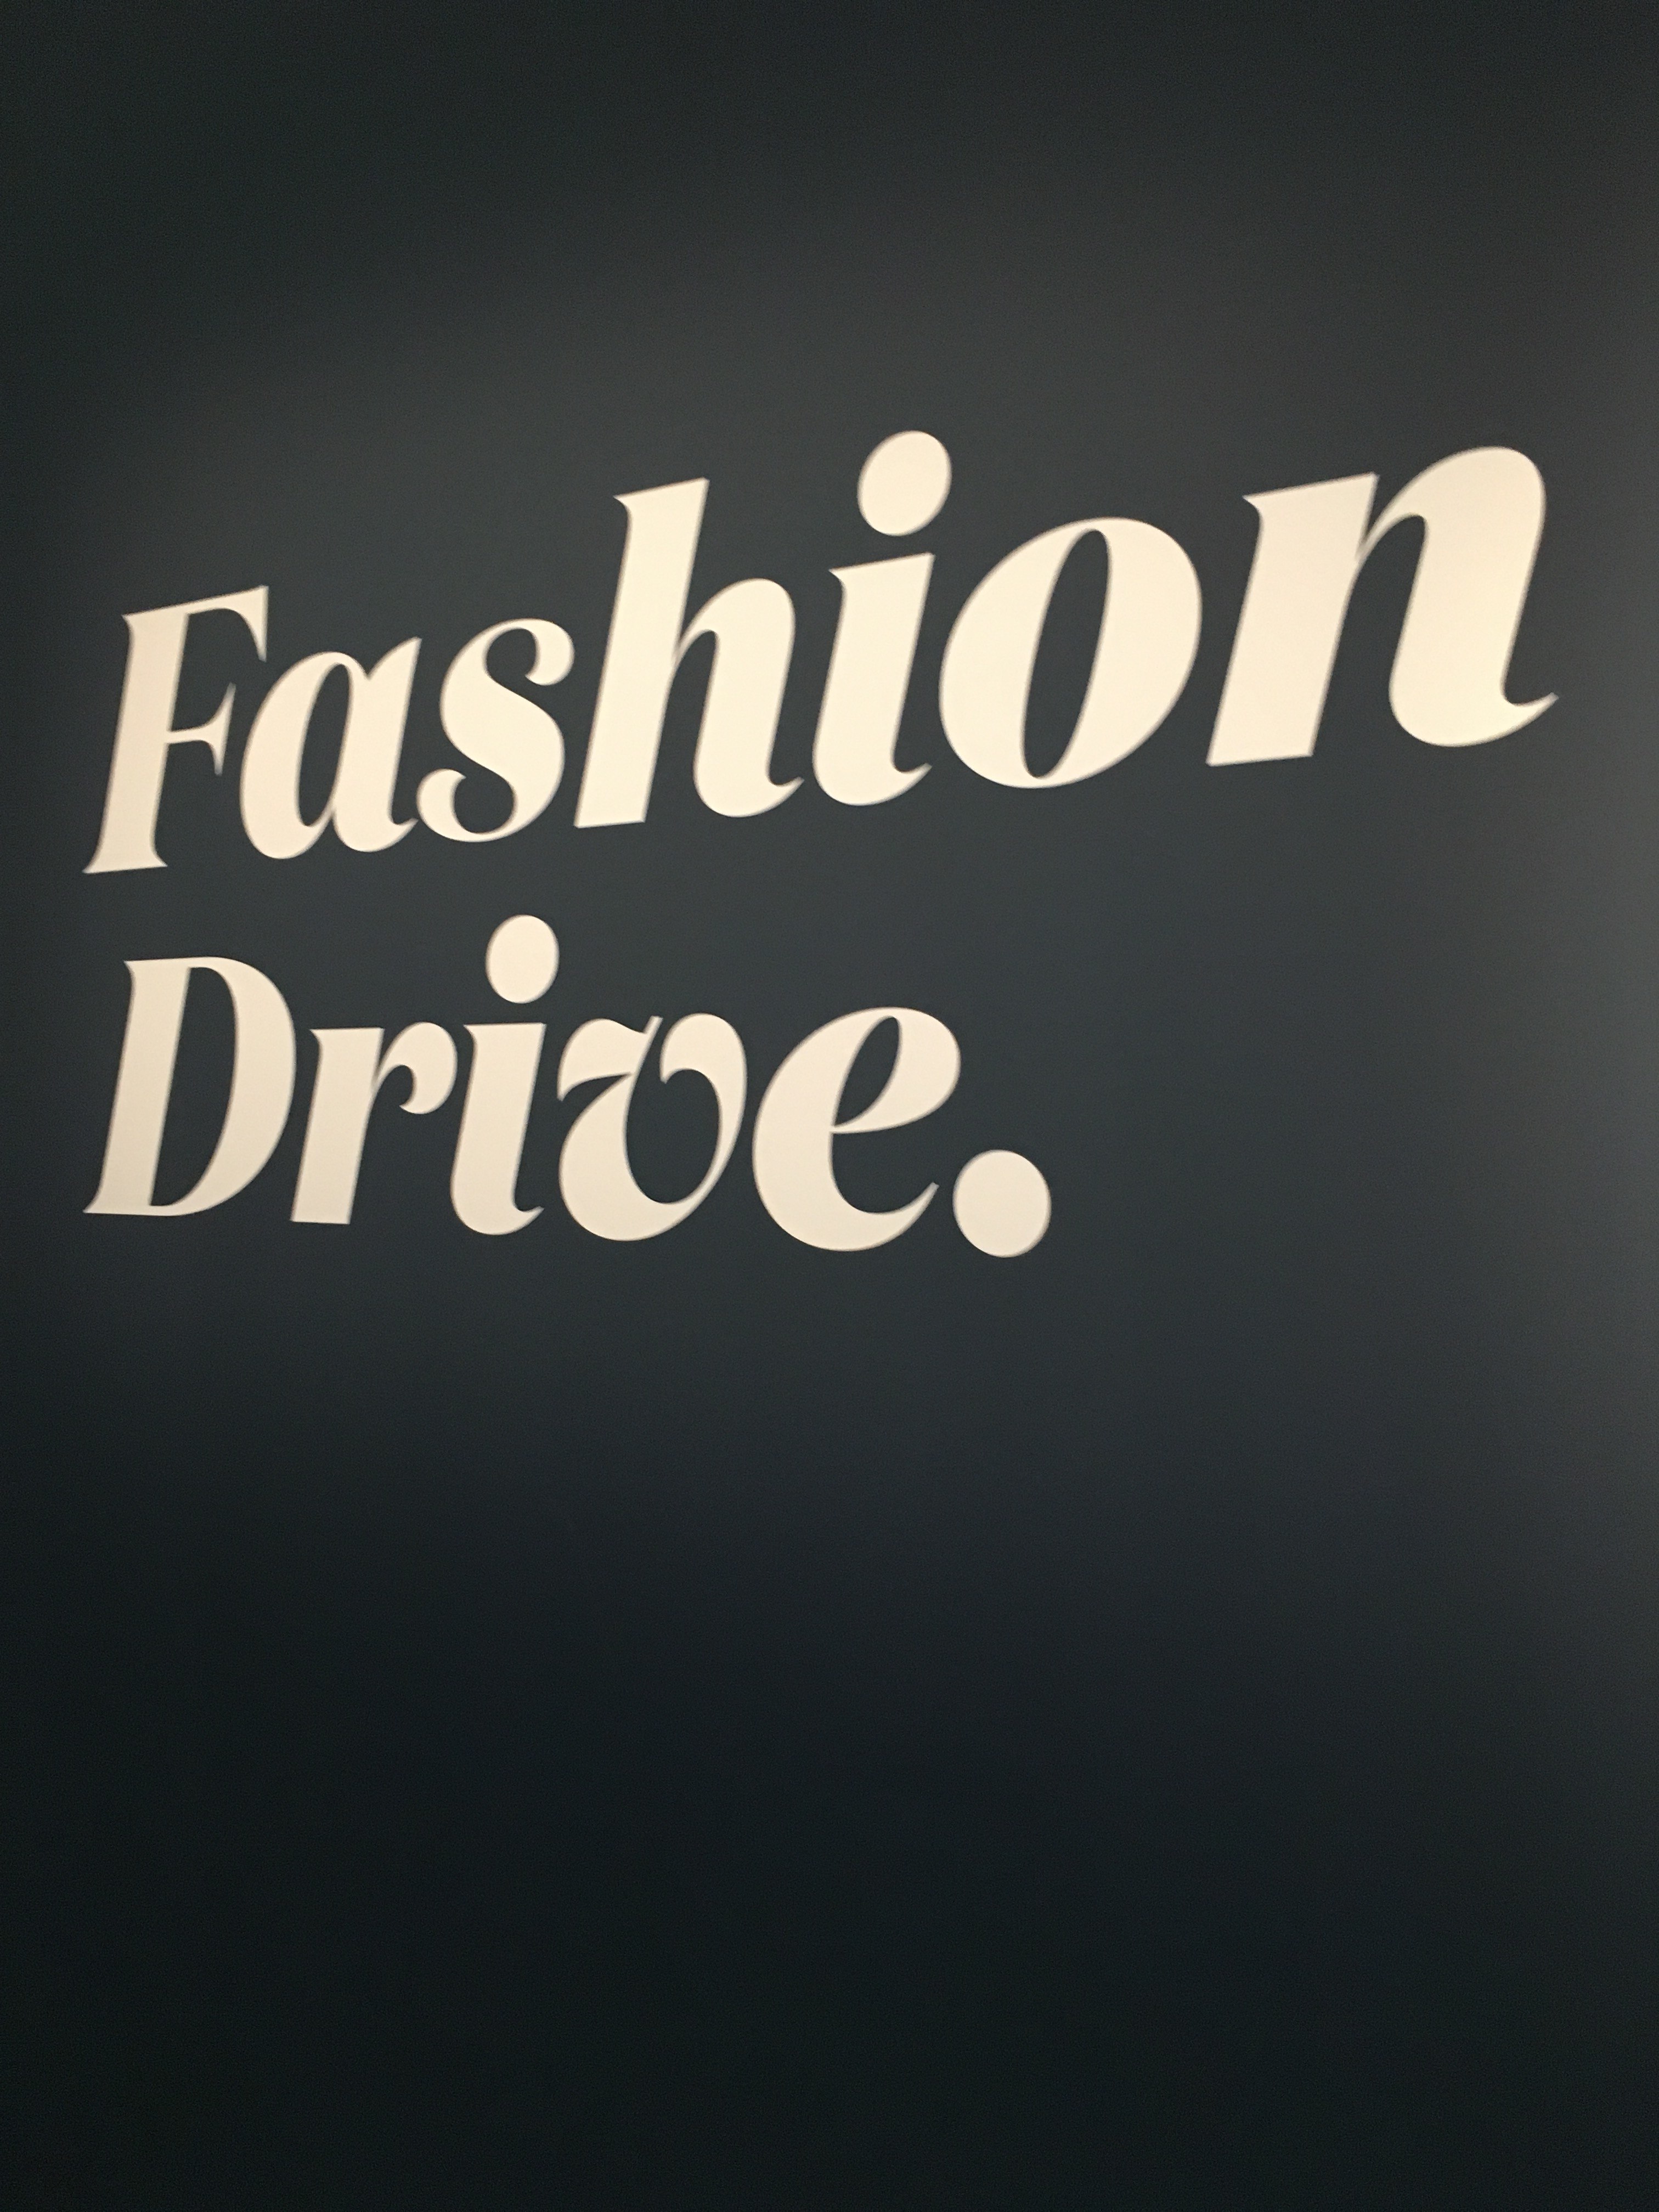 IG Meetup “Fashion Drive”